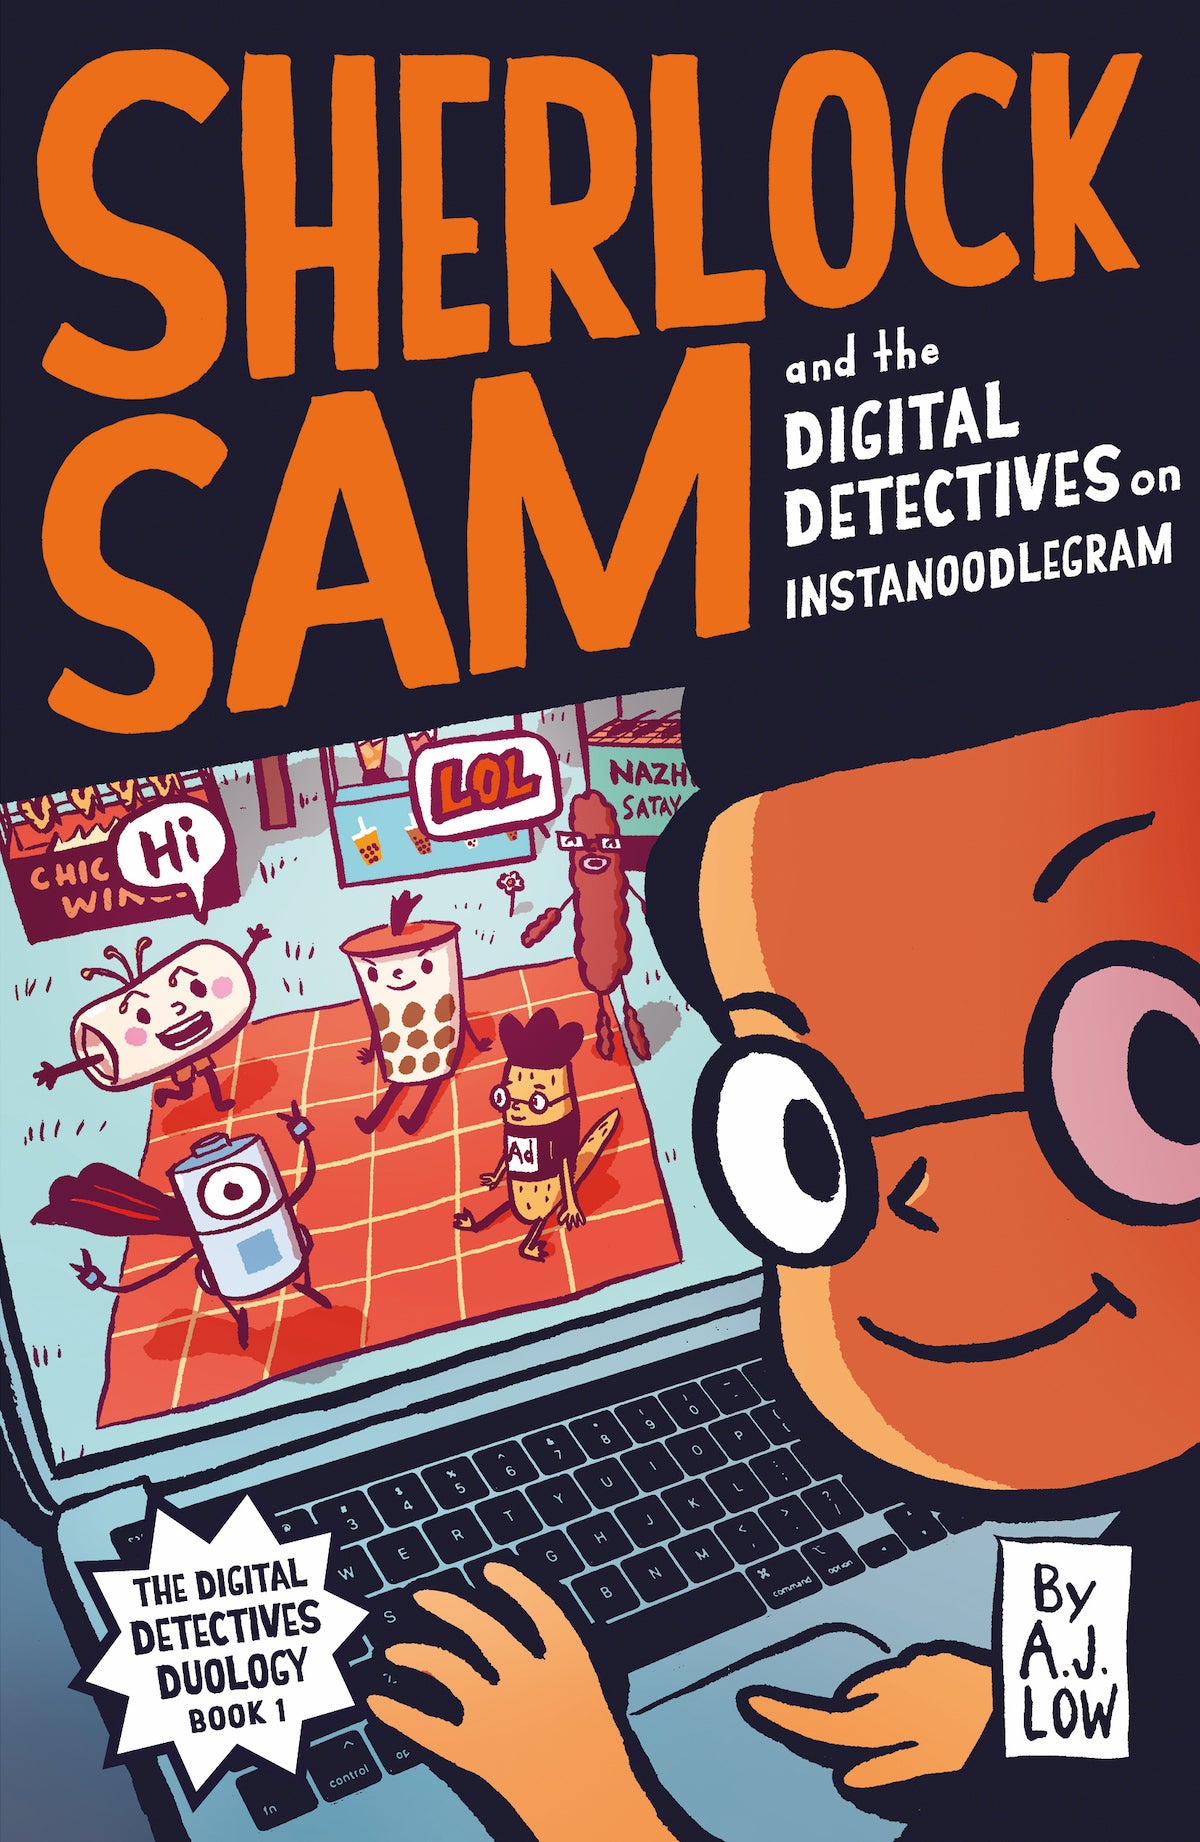 Sherlock Sam and the Digital Detectives on Instanoodlegram (Book 16)